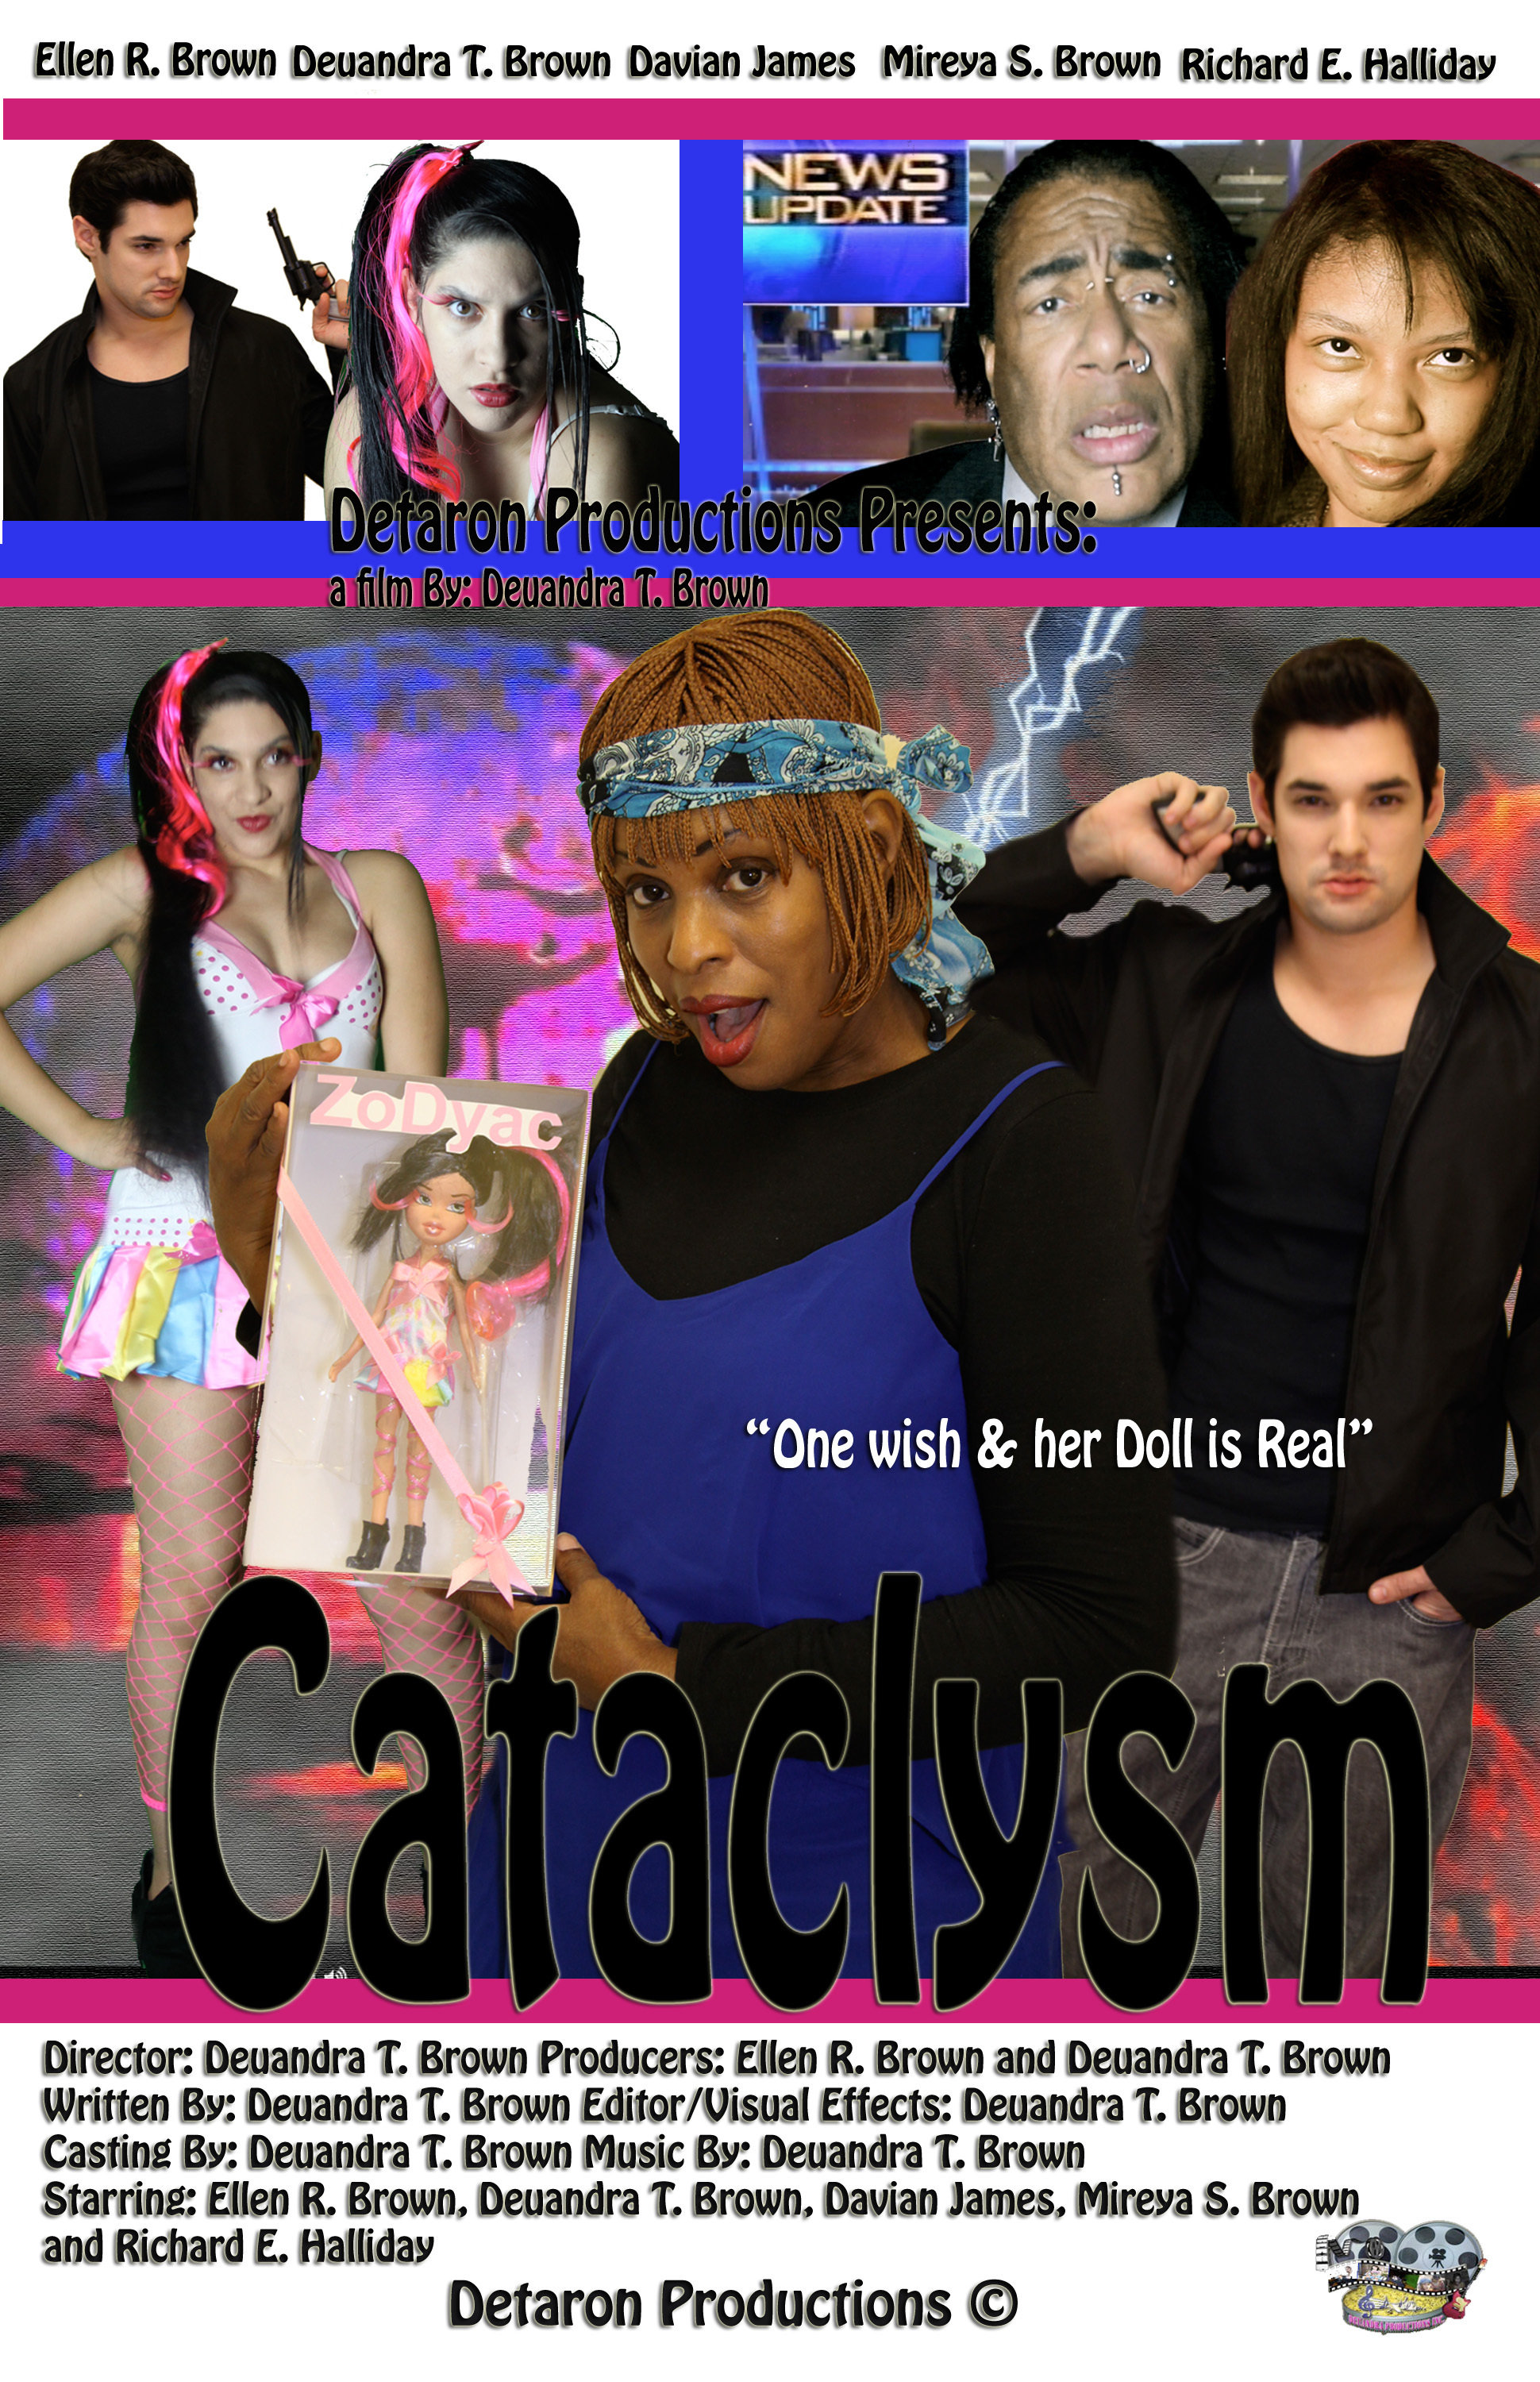 Cataclysm (short film) Poster 2013